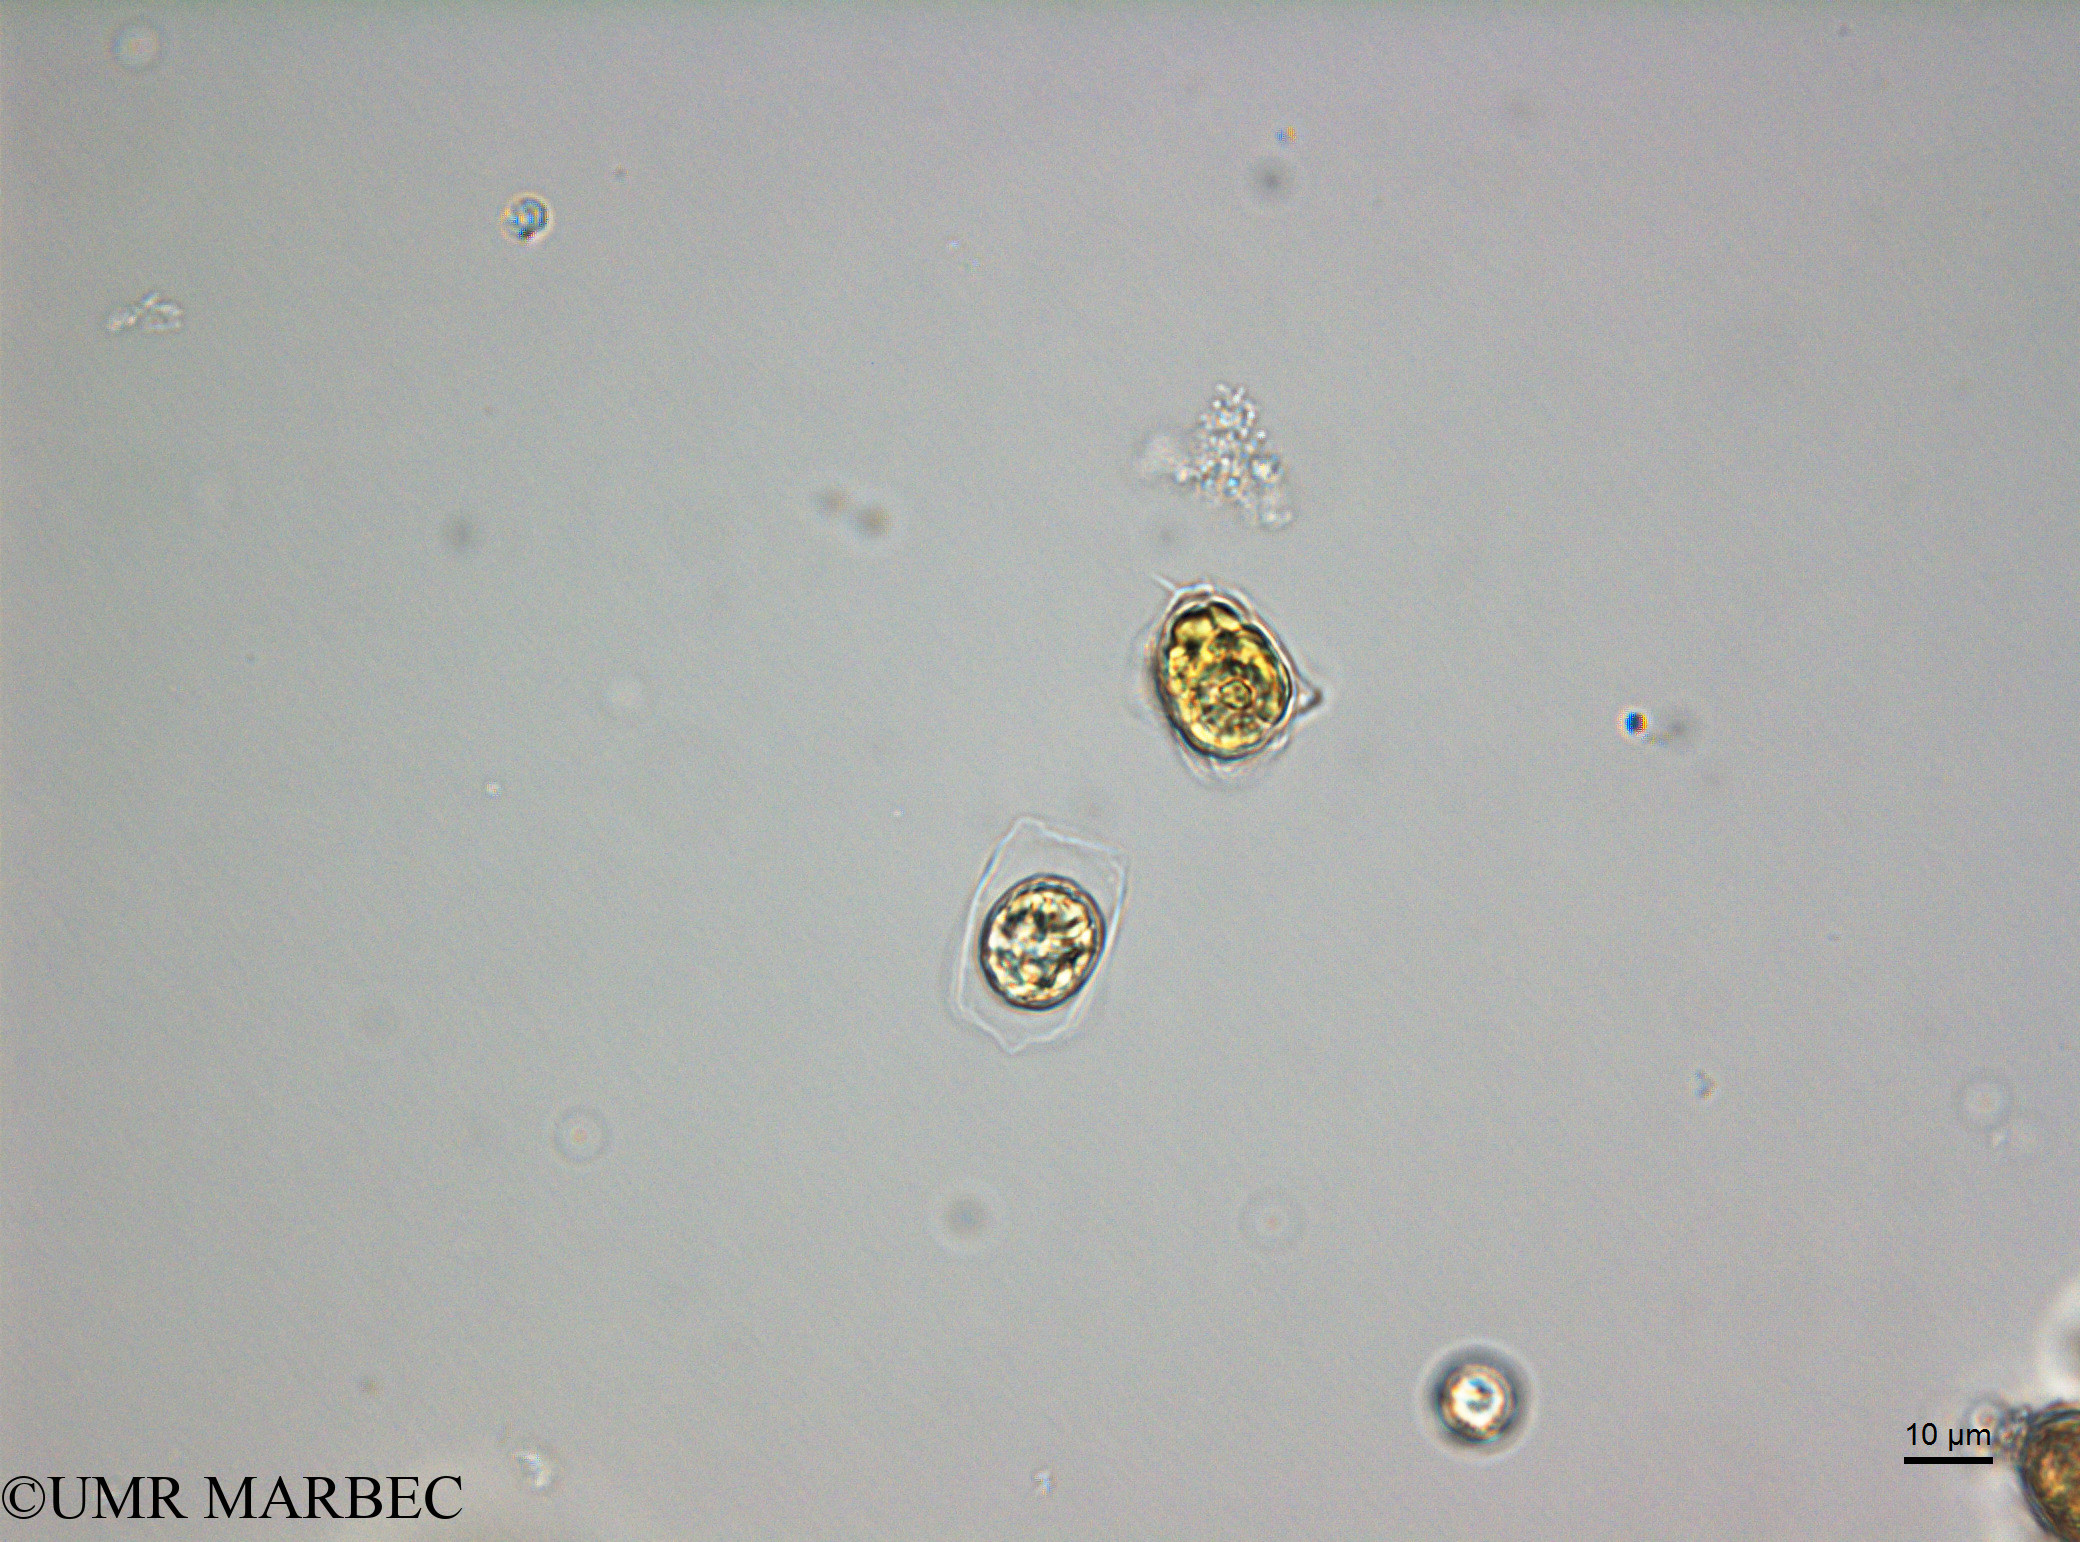 phyto/Scattered_Islands/juan_de_nova/COMMA2 November 2013/Cerataulina sp1 (D5_2_diatomee_ancien_melosira180717_001_ovl-21)(copy).jpg